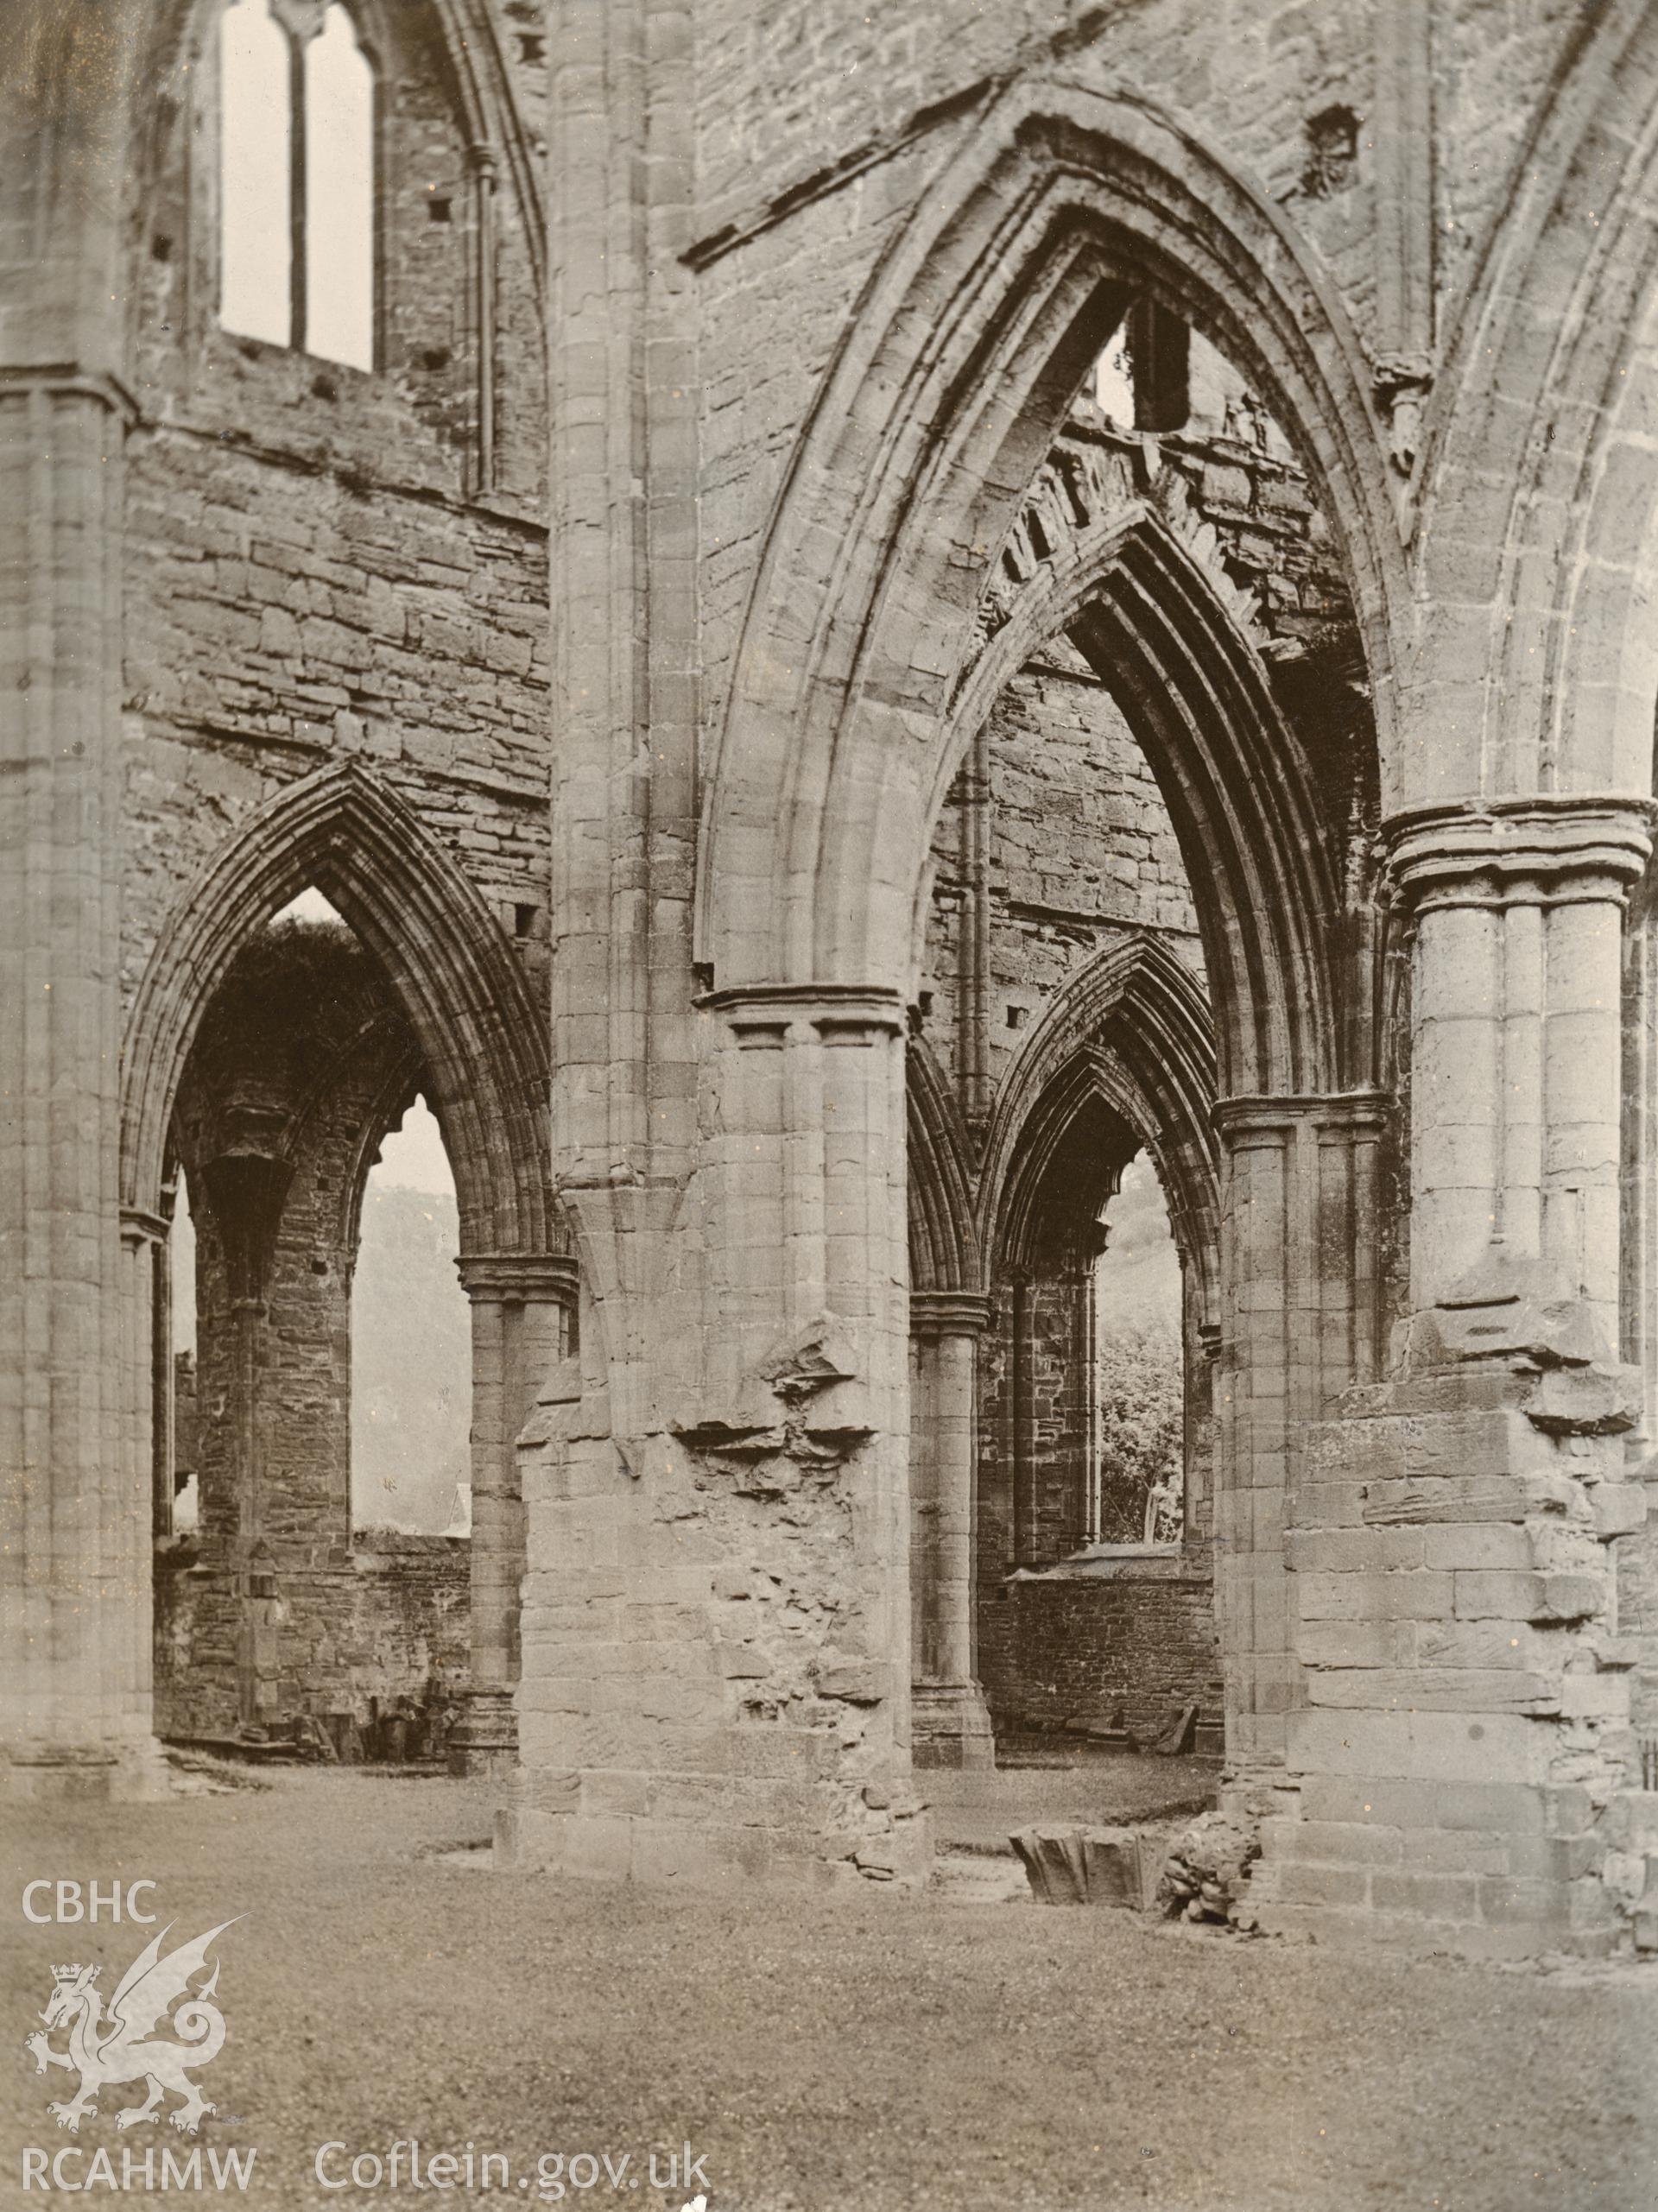 Digital copy of a circa 1870 albumen print showing an interior view of Tintern Abbey.